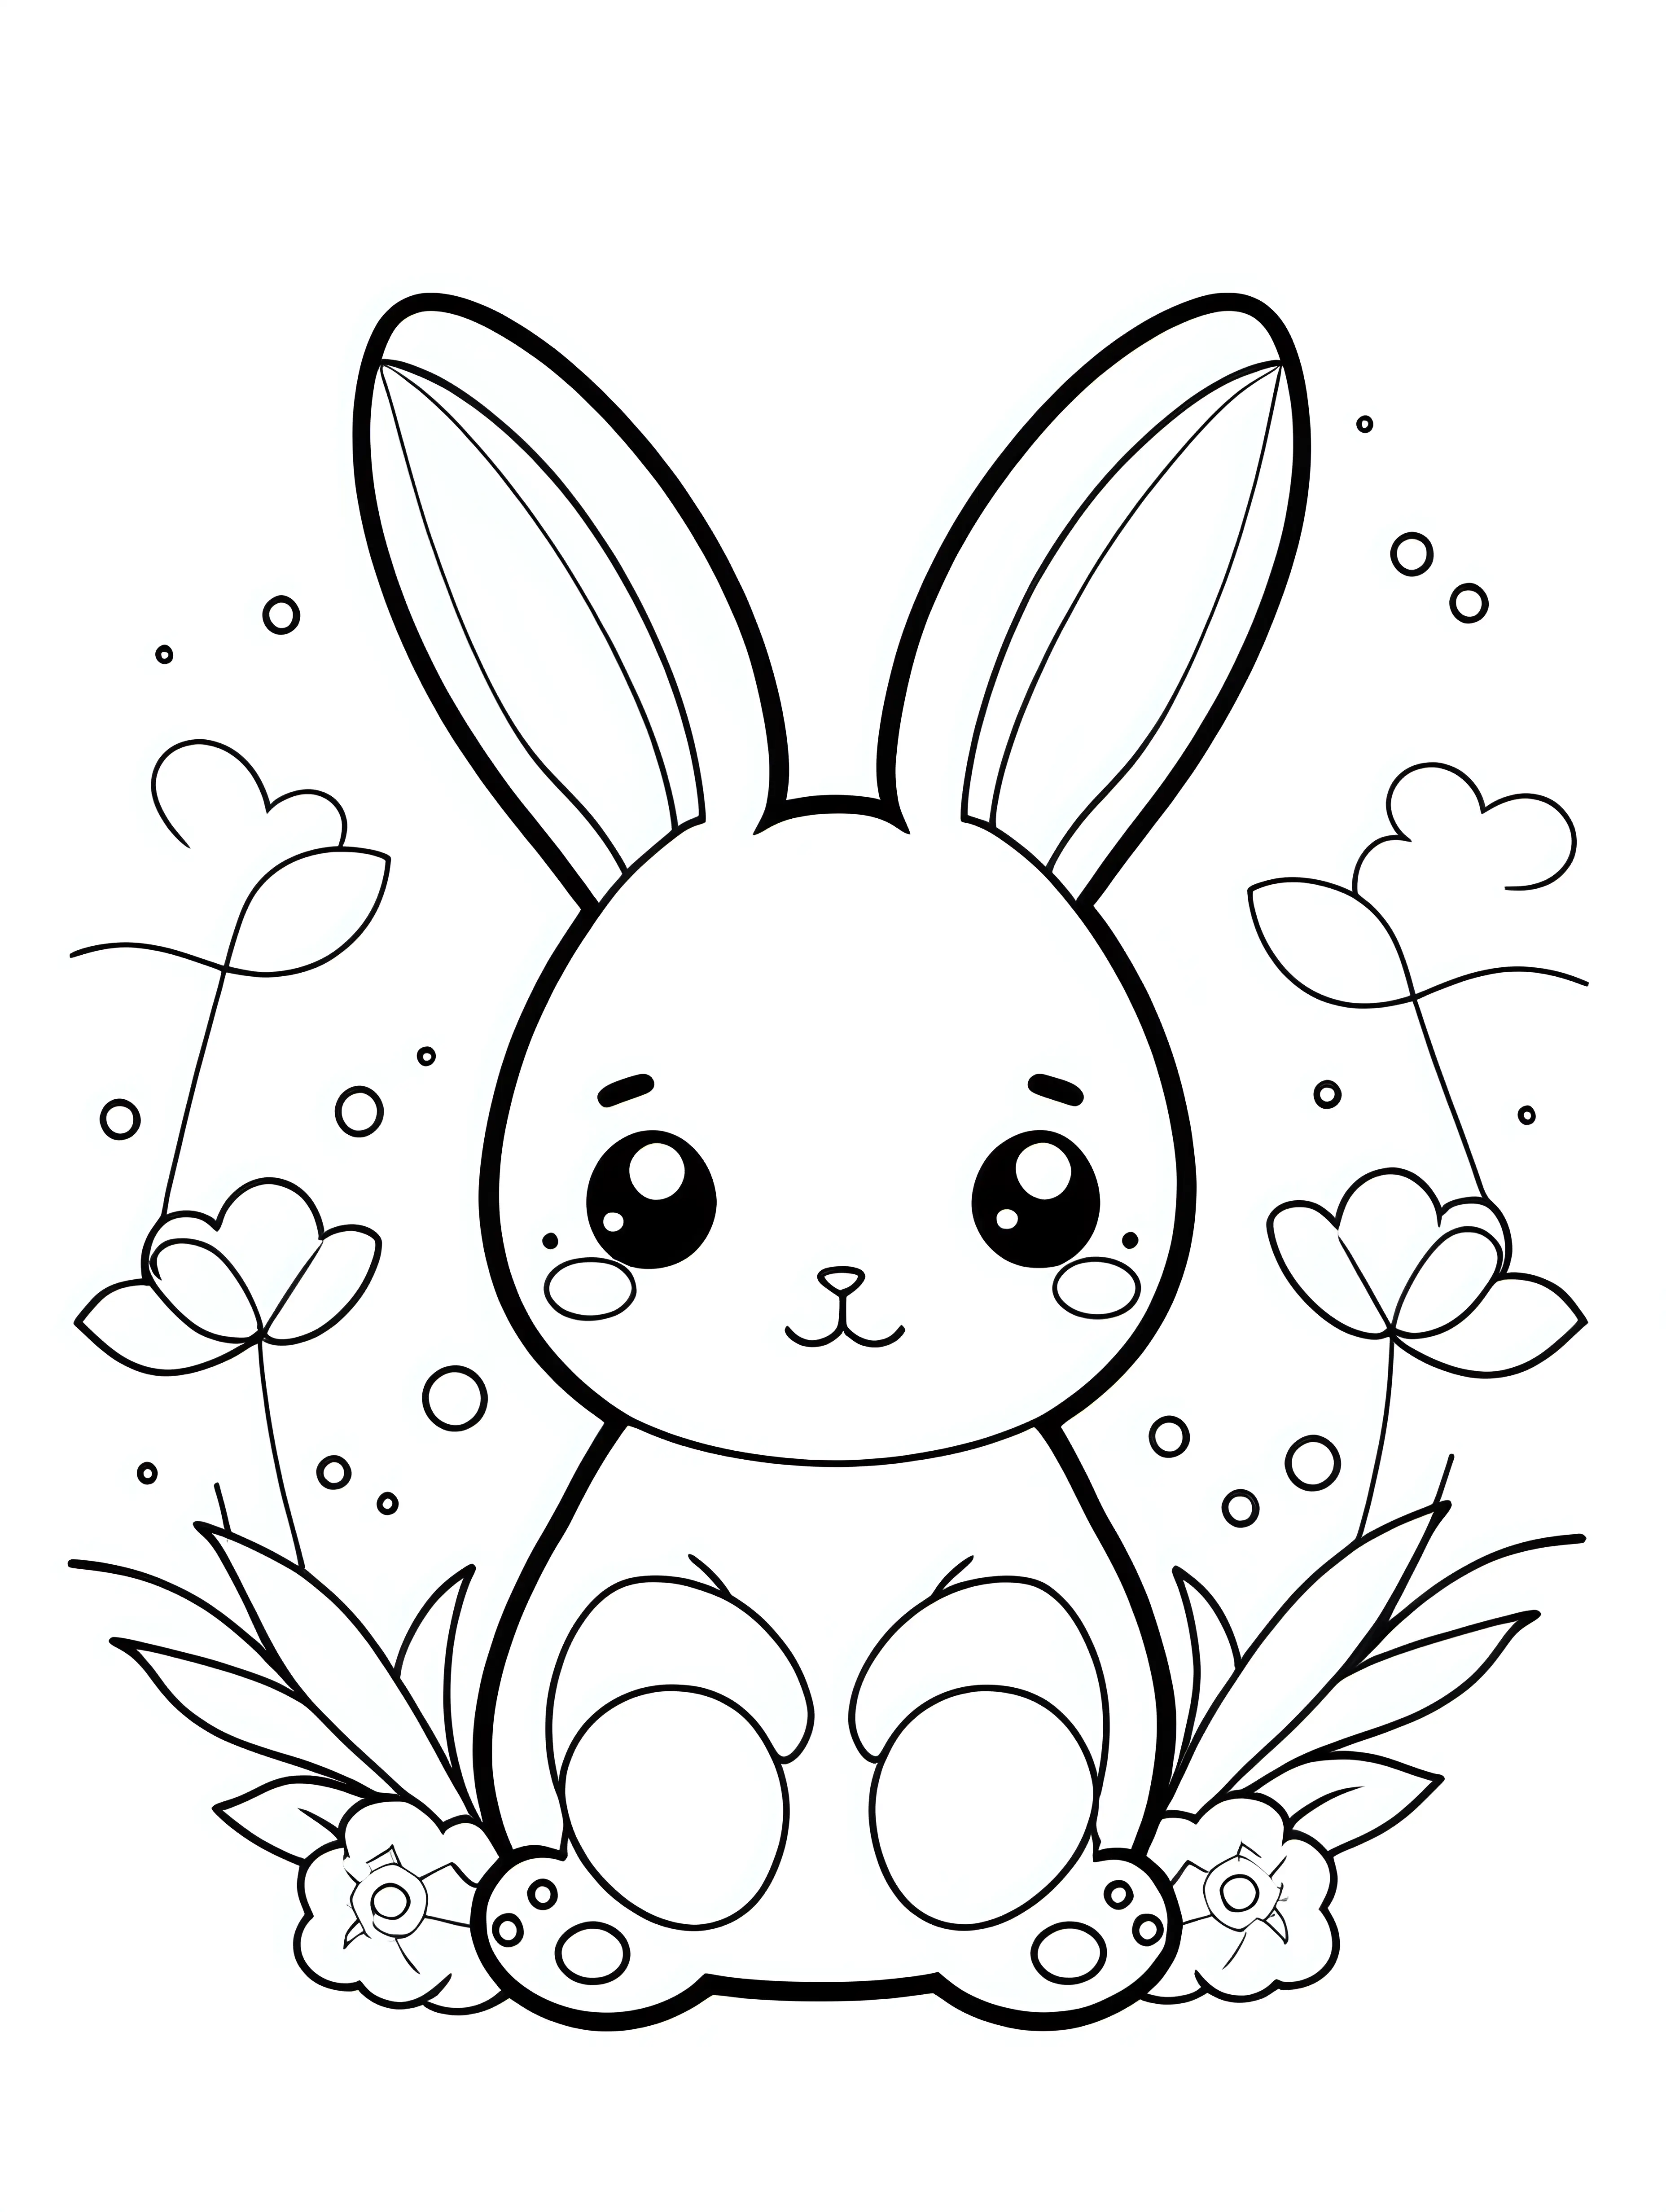 Minimalistic Kawaii Bunny Coloring Page